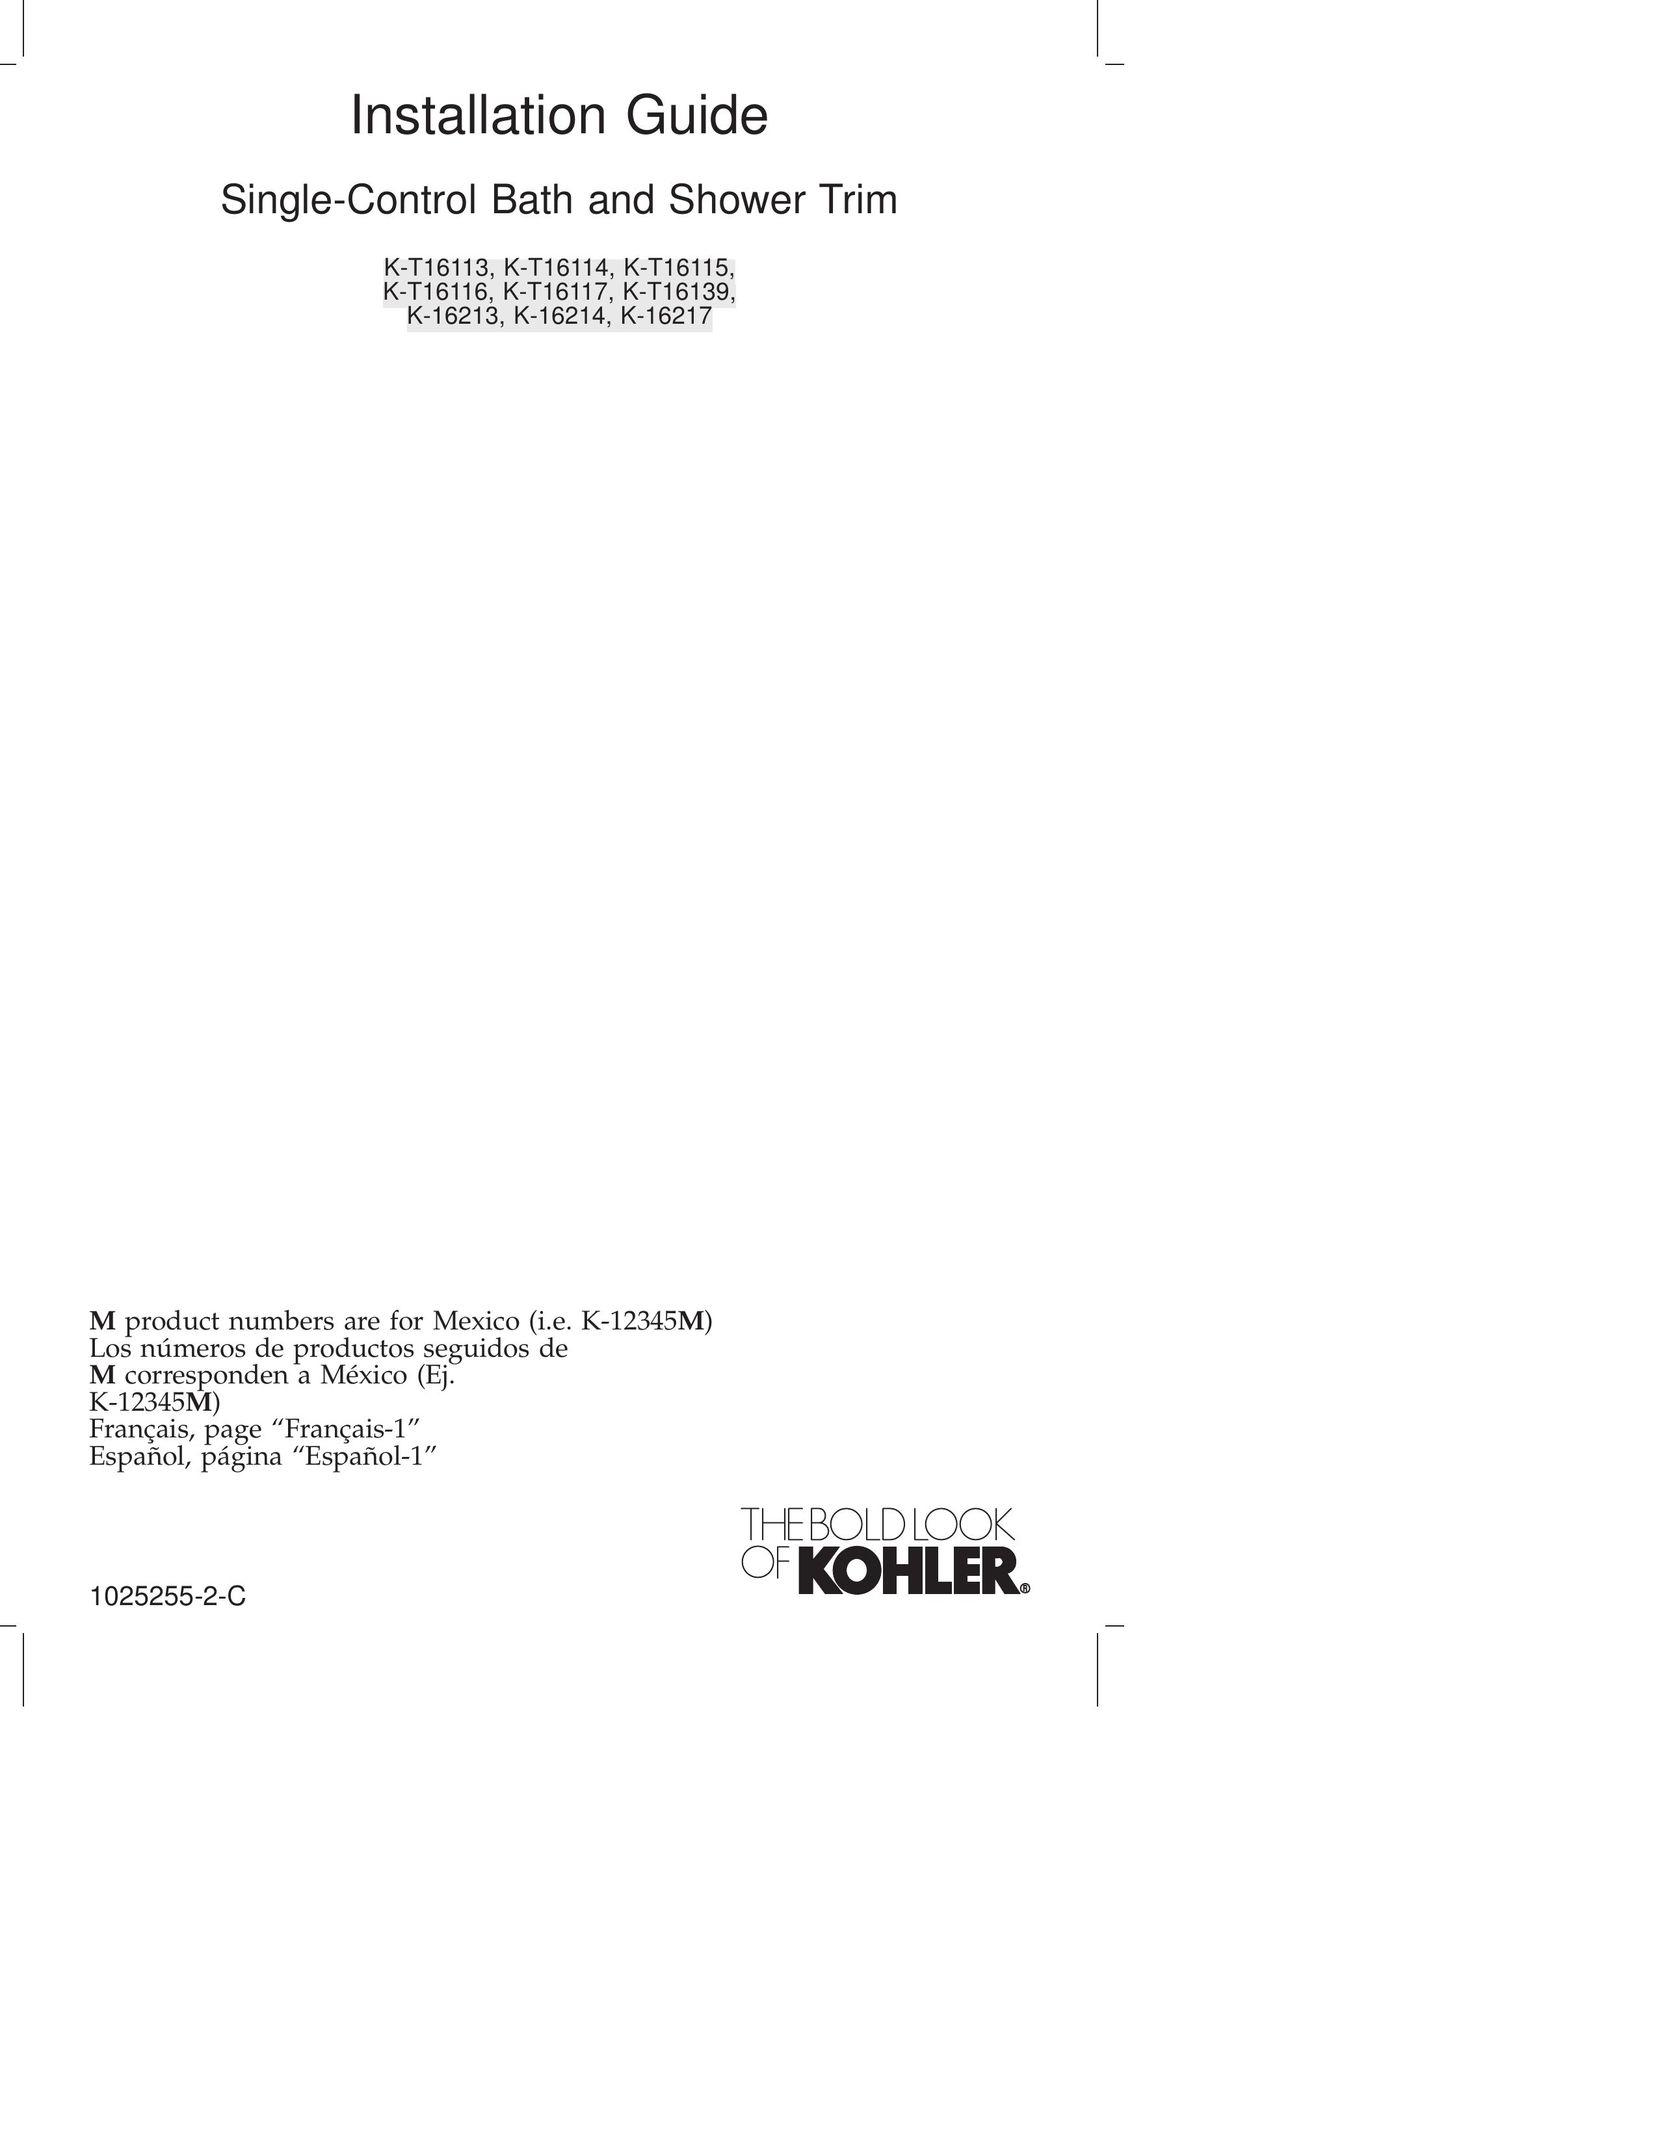 Kohler K-16214 Plumbing Product User Manual